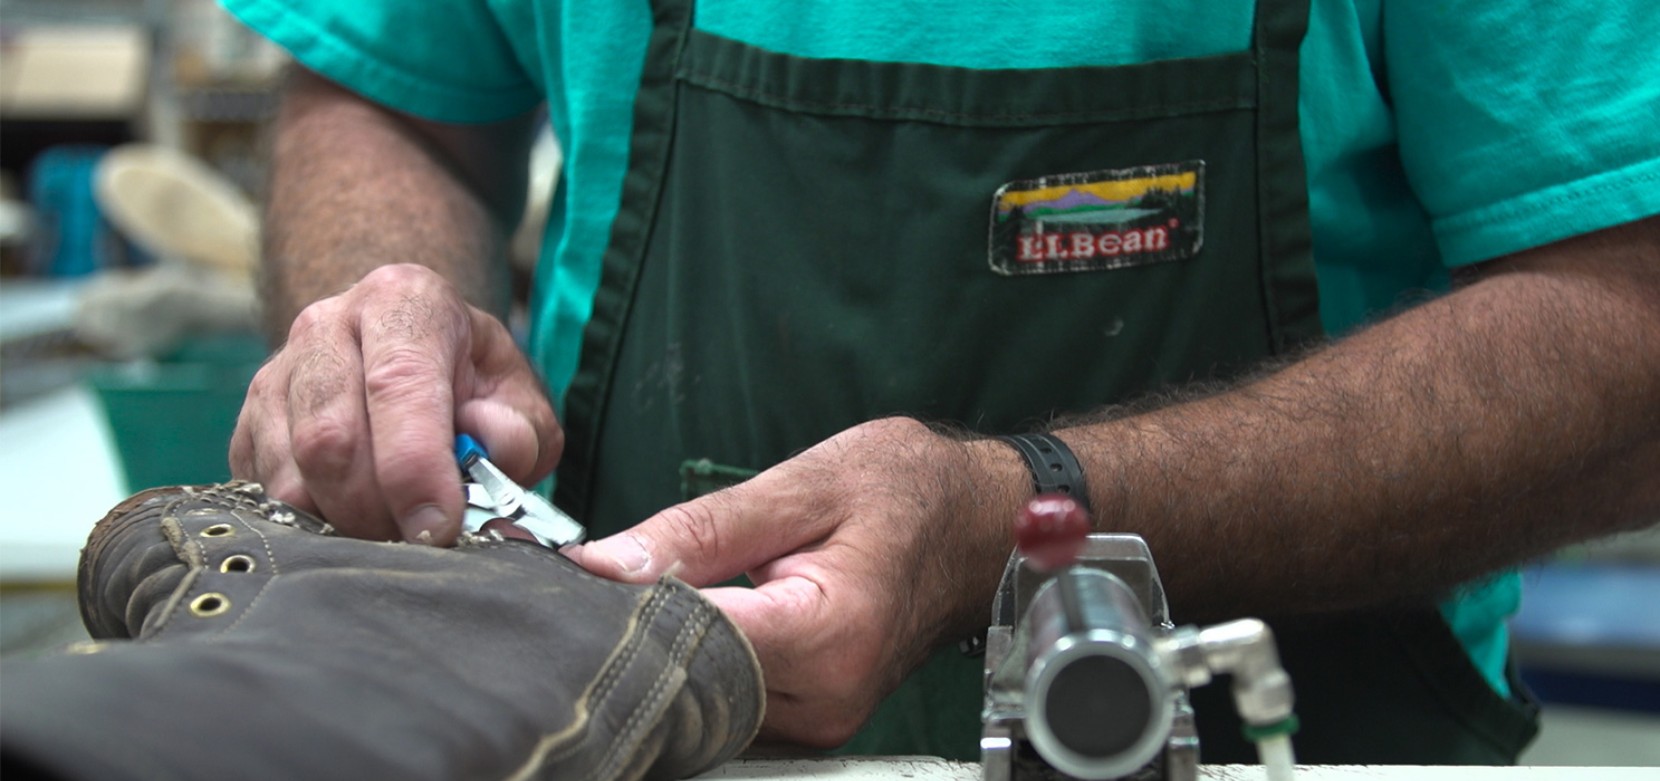 L.L.Bean Employee repairing a Bean Boot.